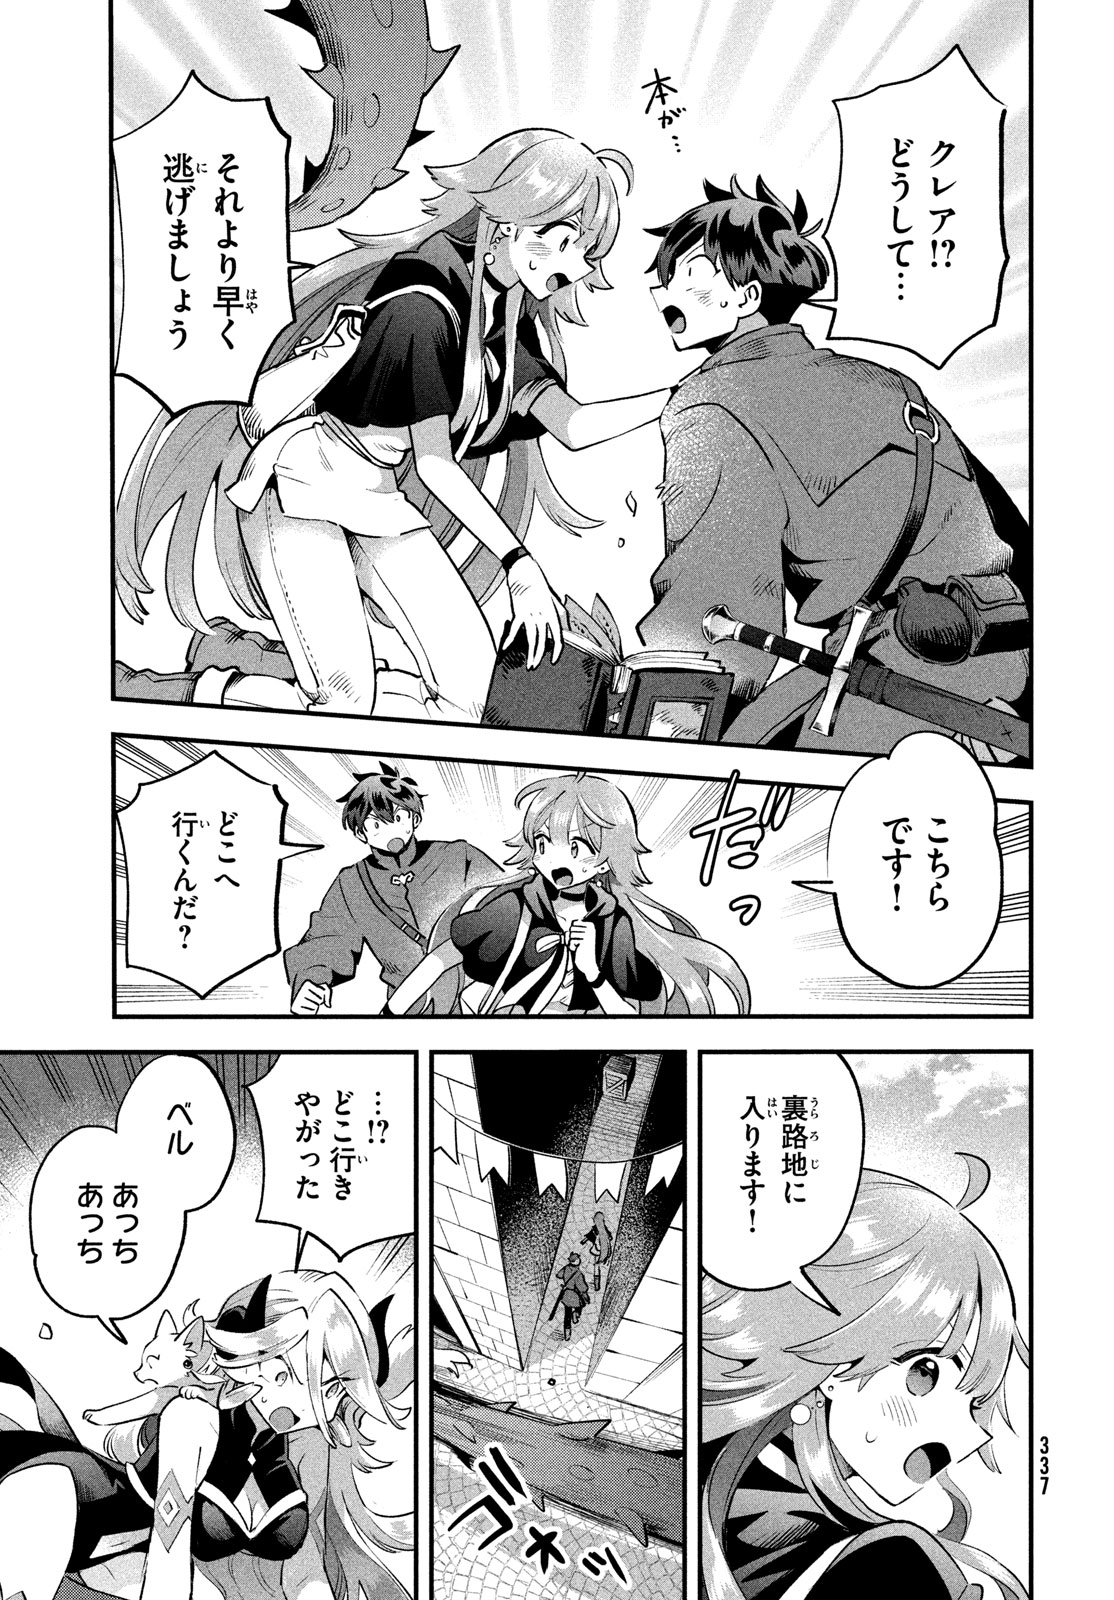 7-nin no Nemuri Hime - Chapter 43 - Page 11